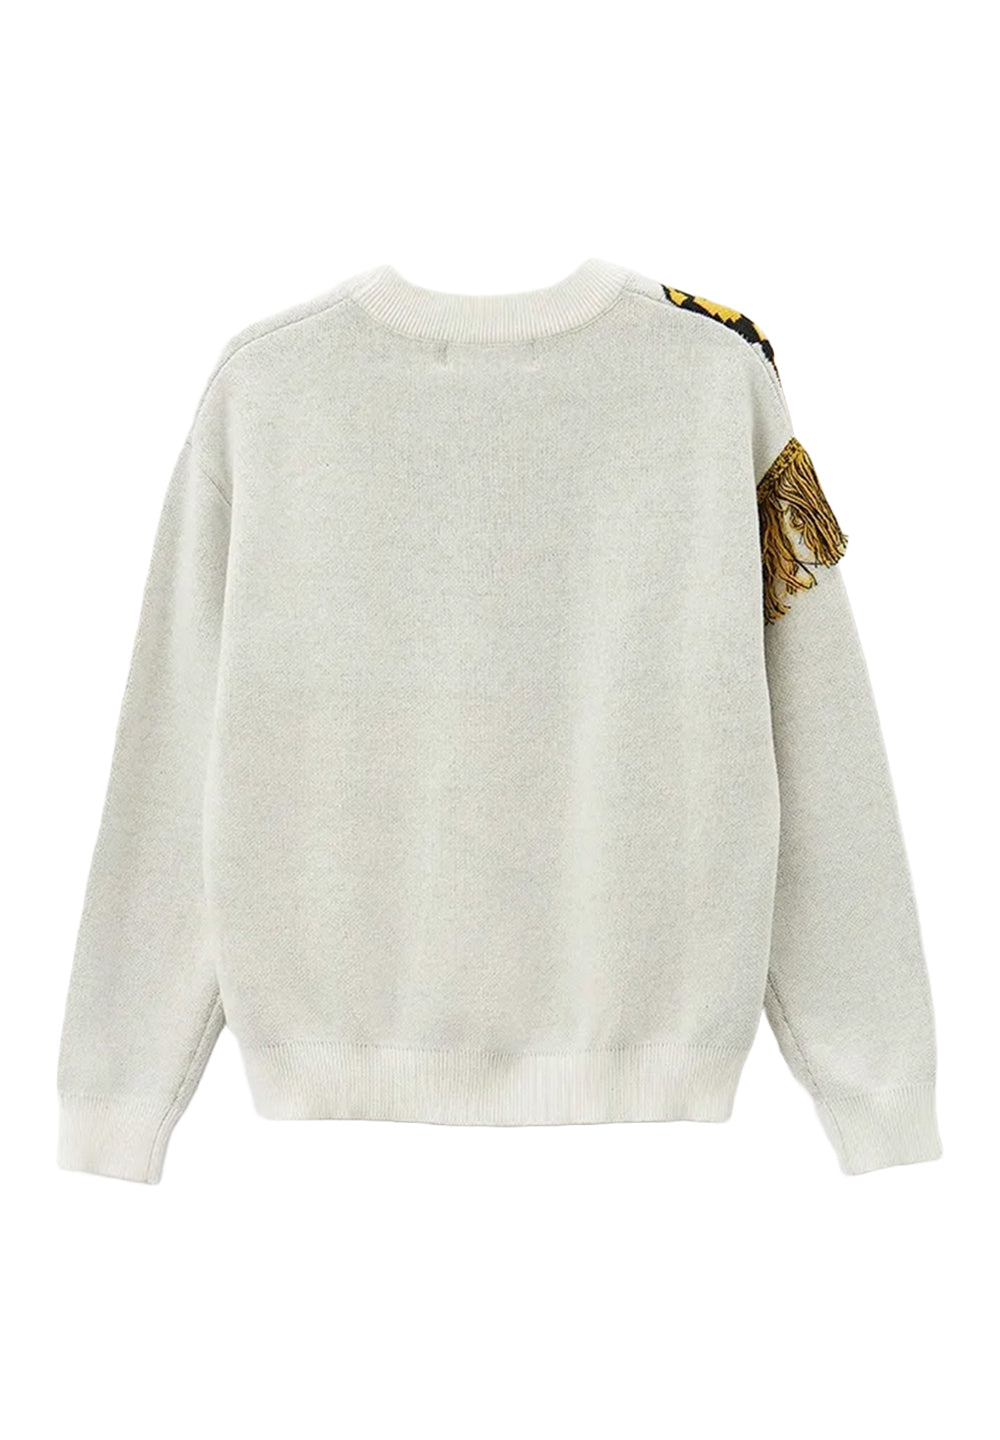 Cream sweater for boys